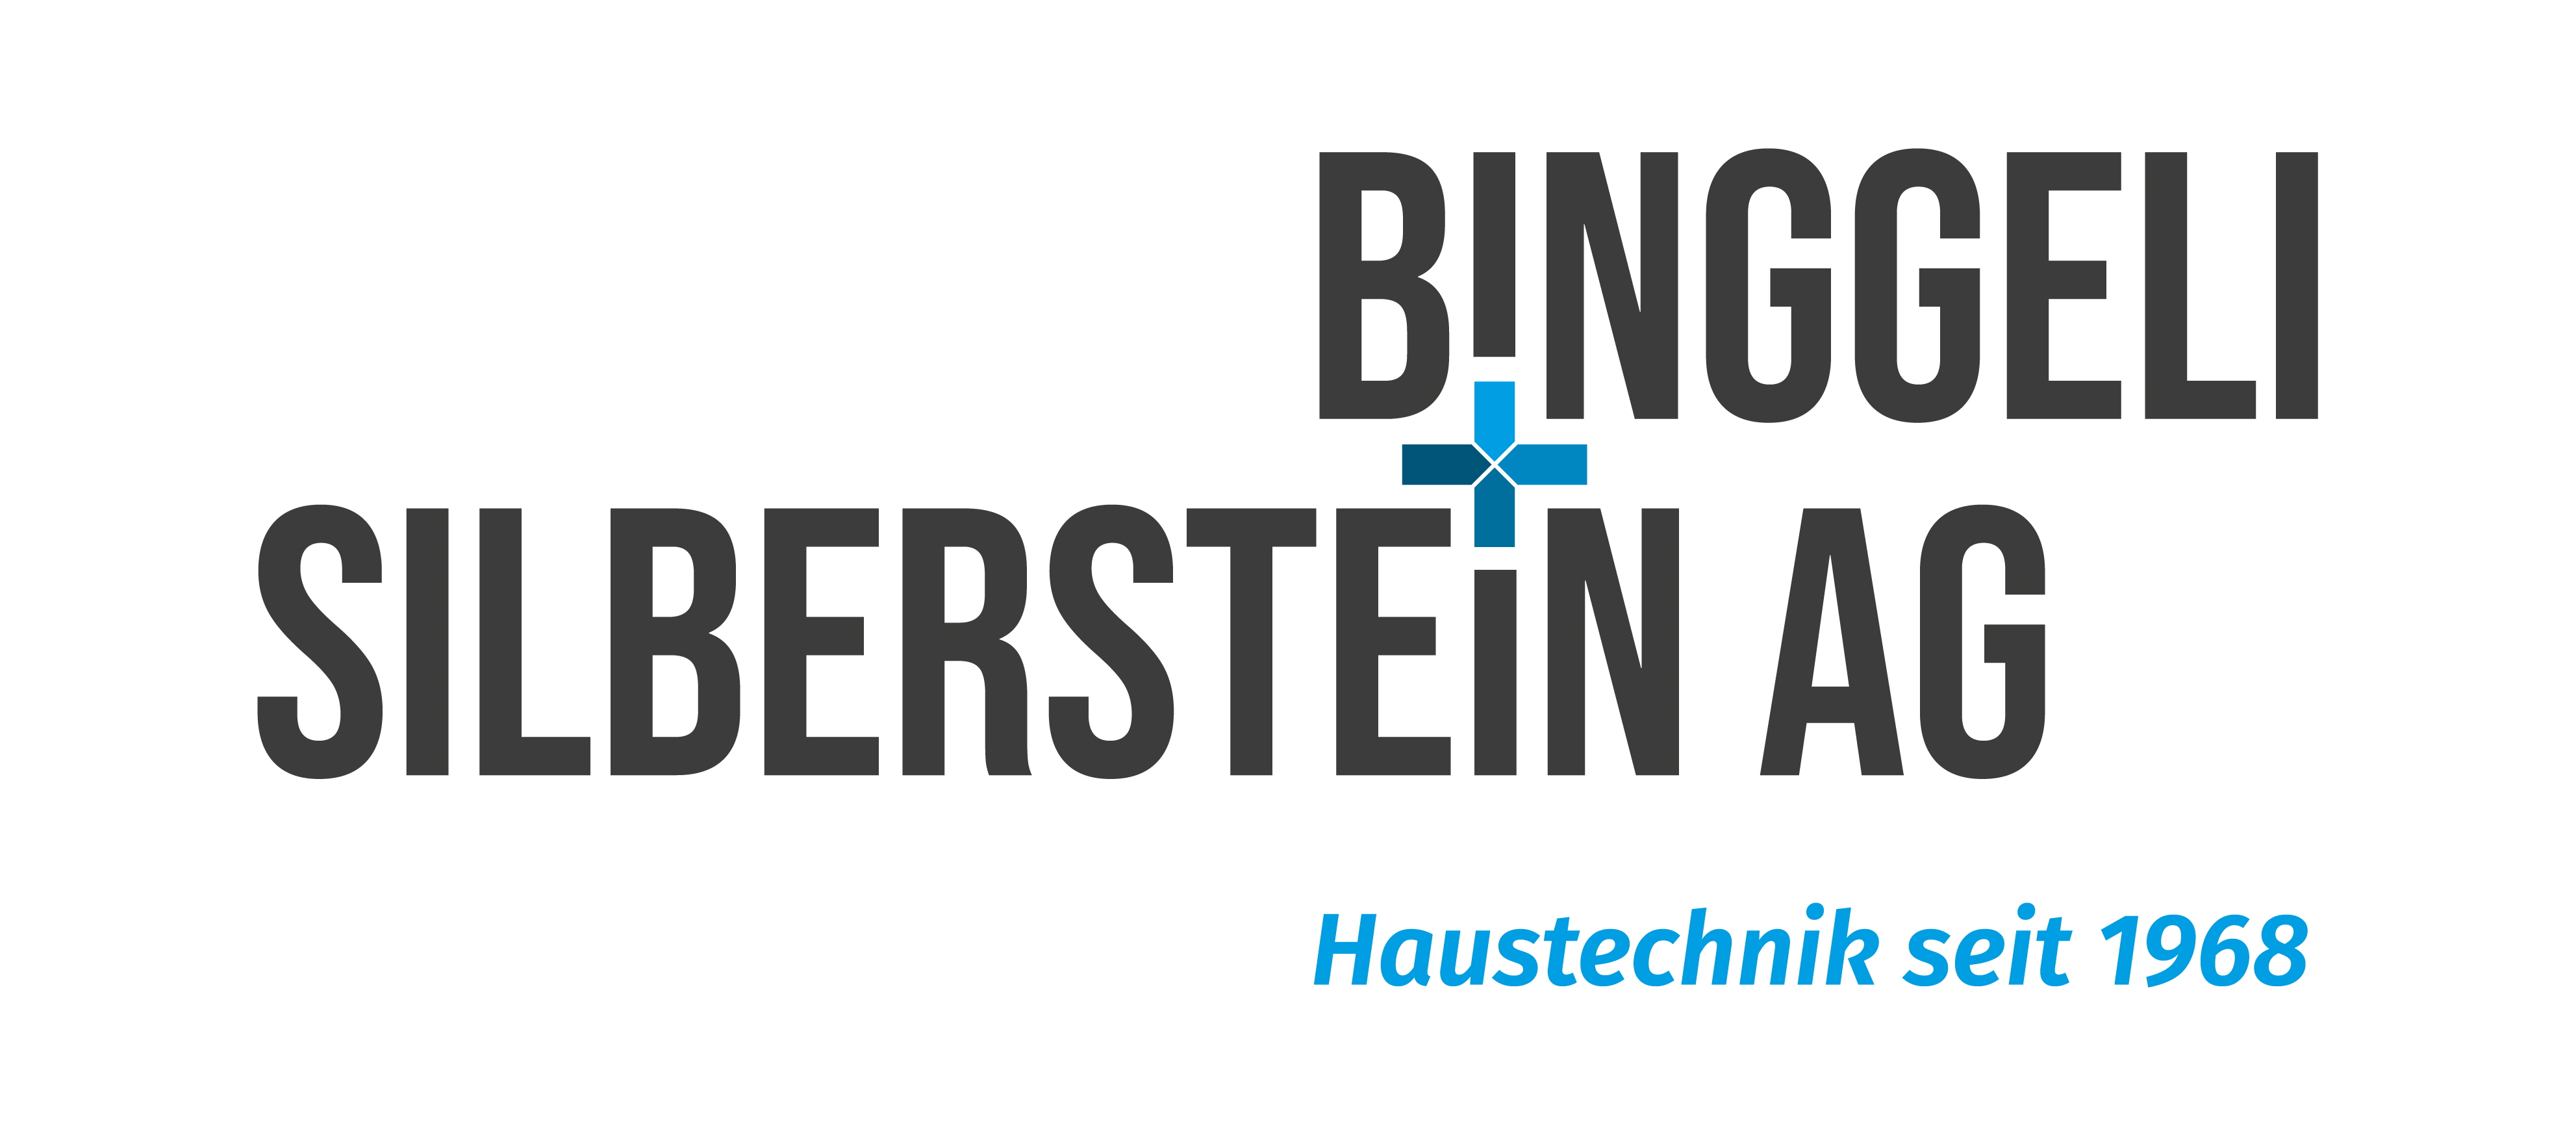 Binggeli + Silberstein AG